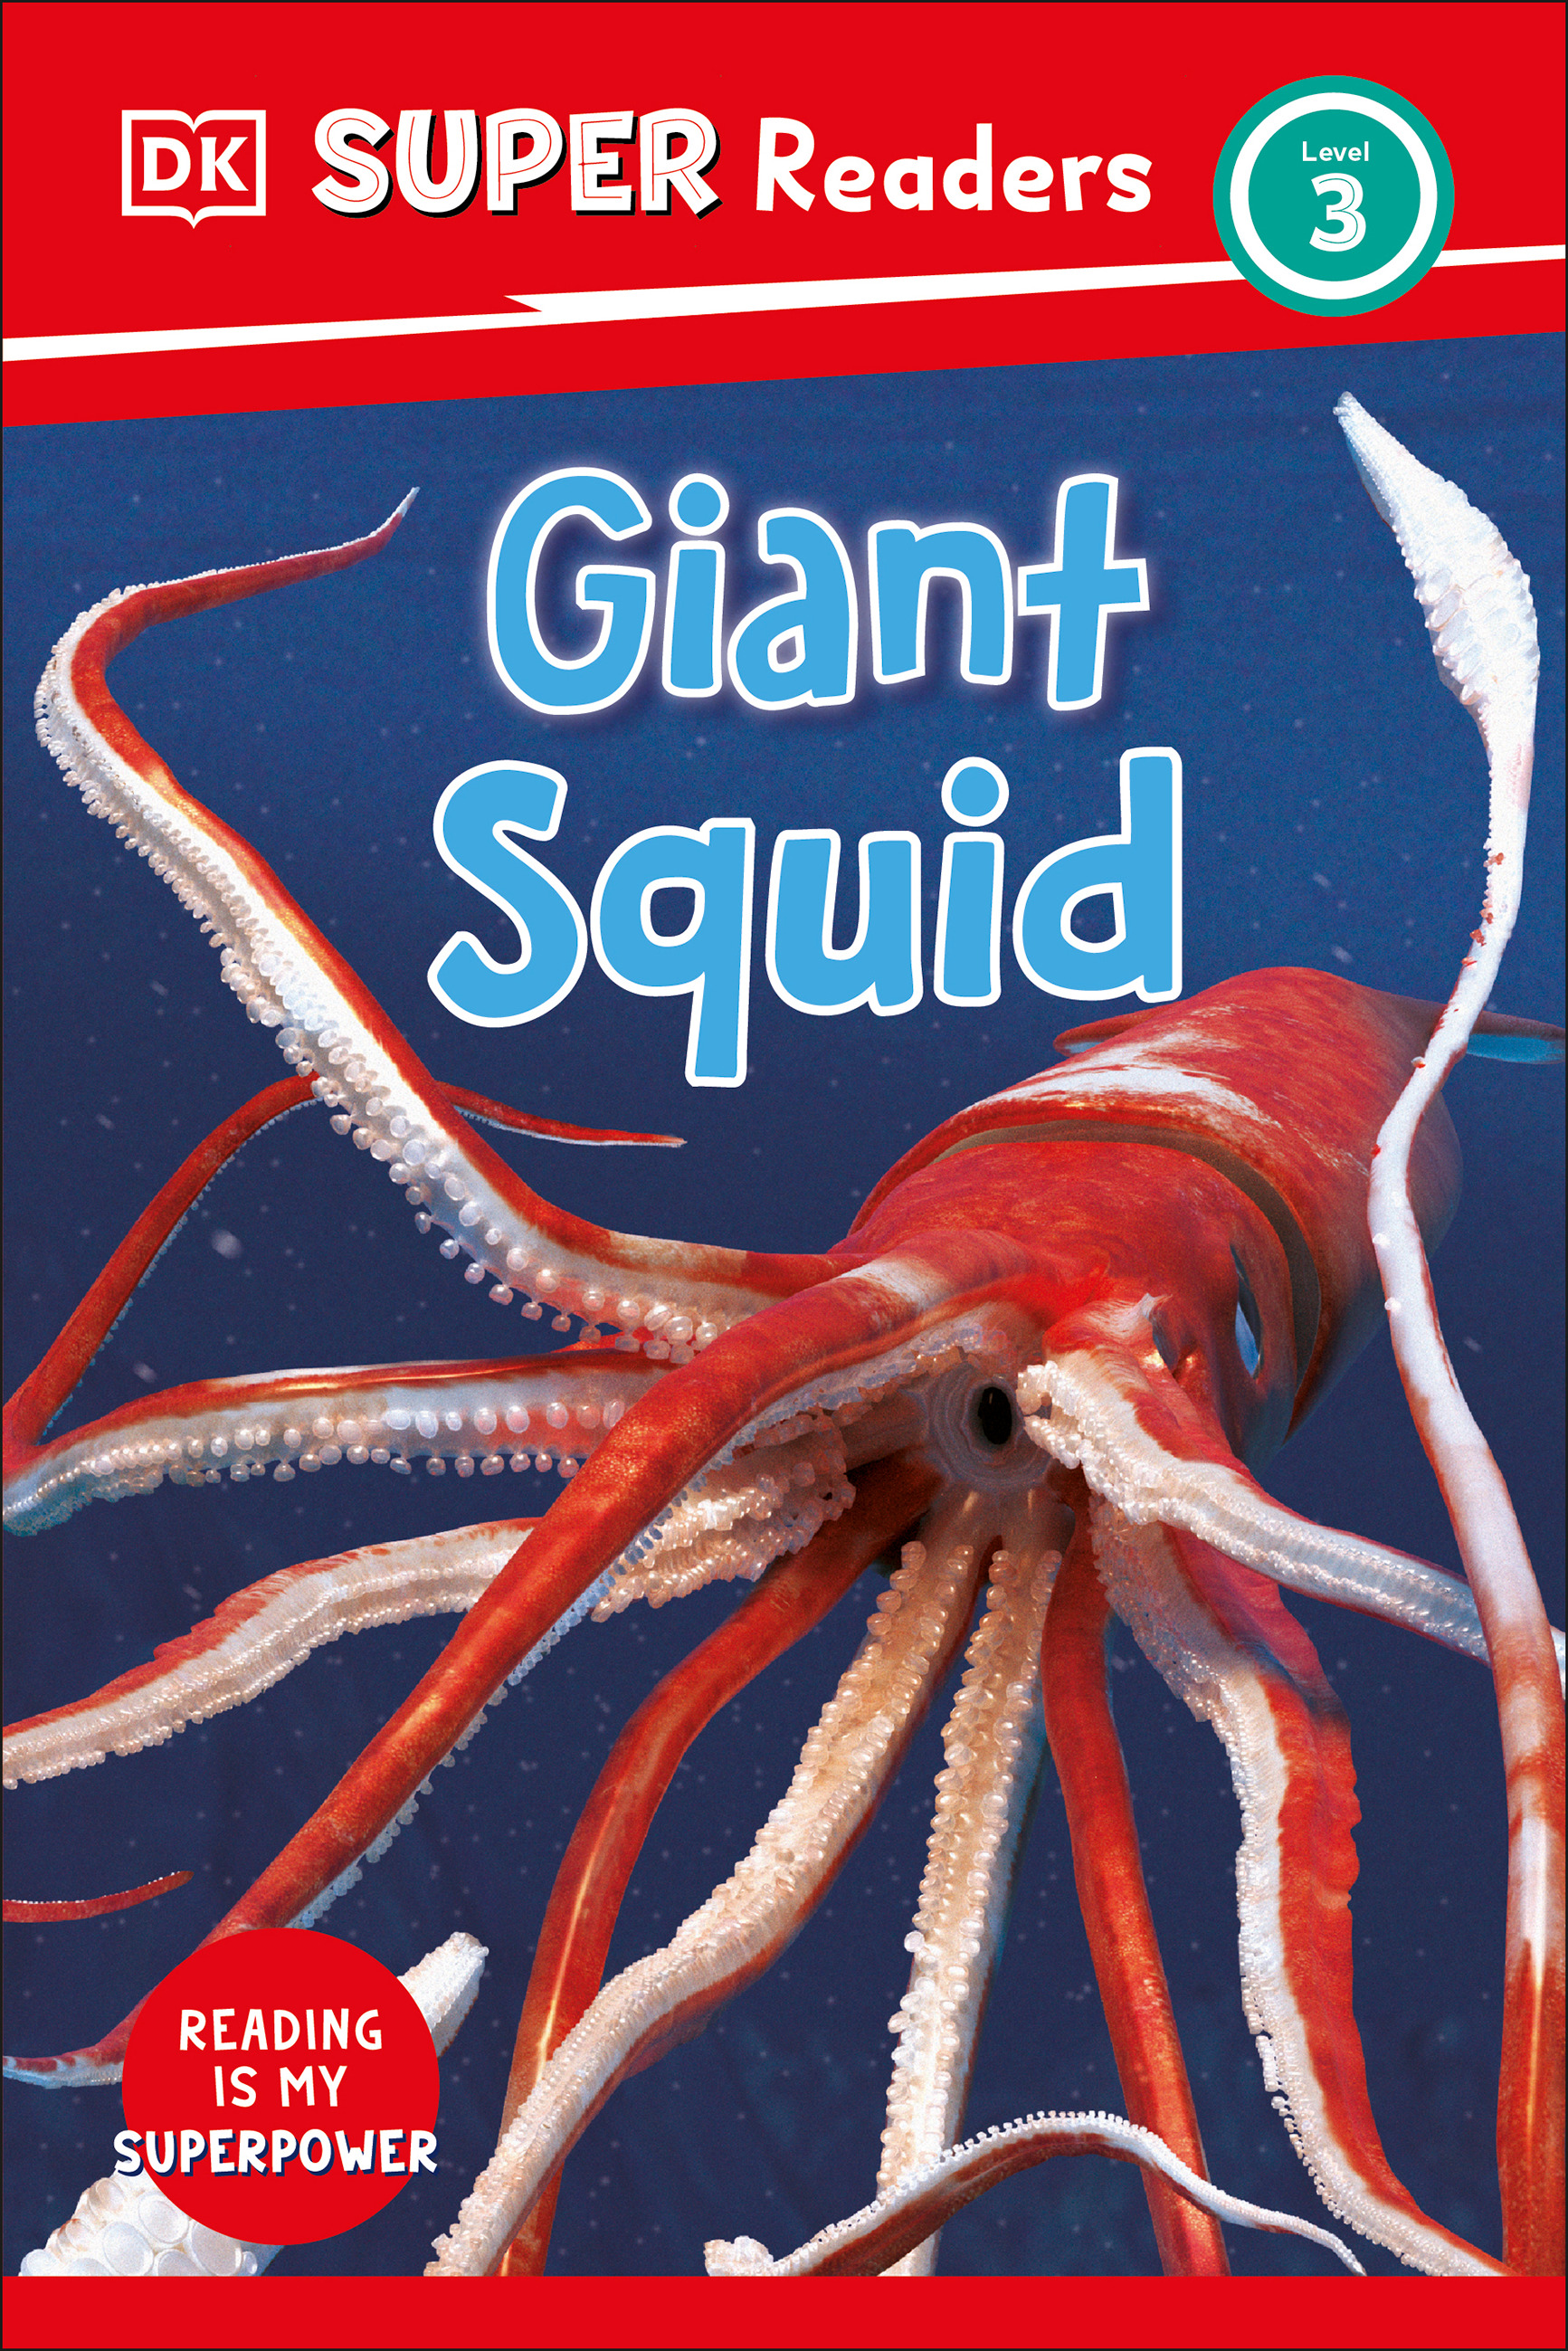 DK Super Readers Level 3 Giant Squid | 